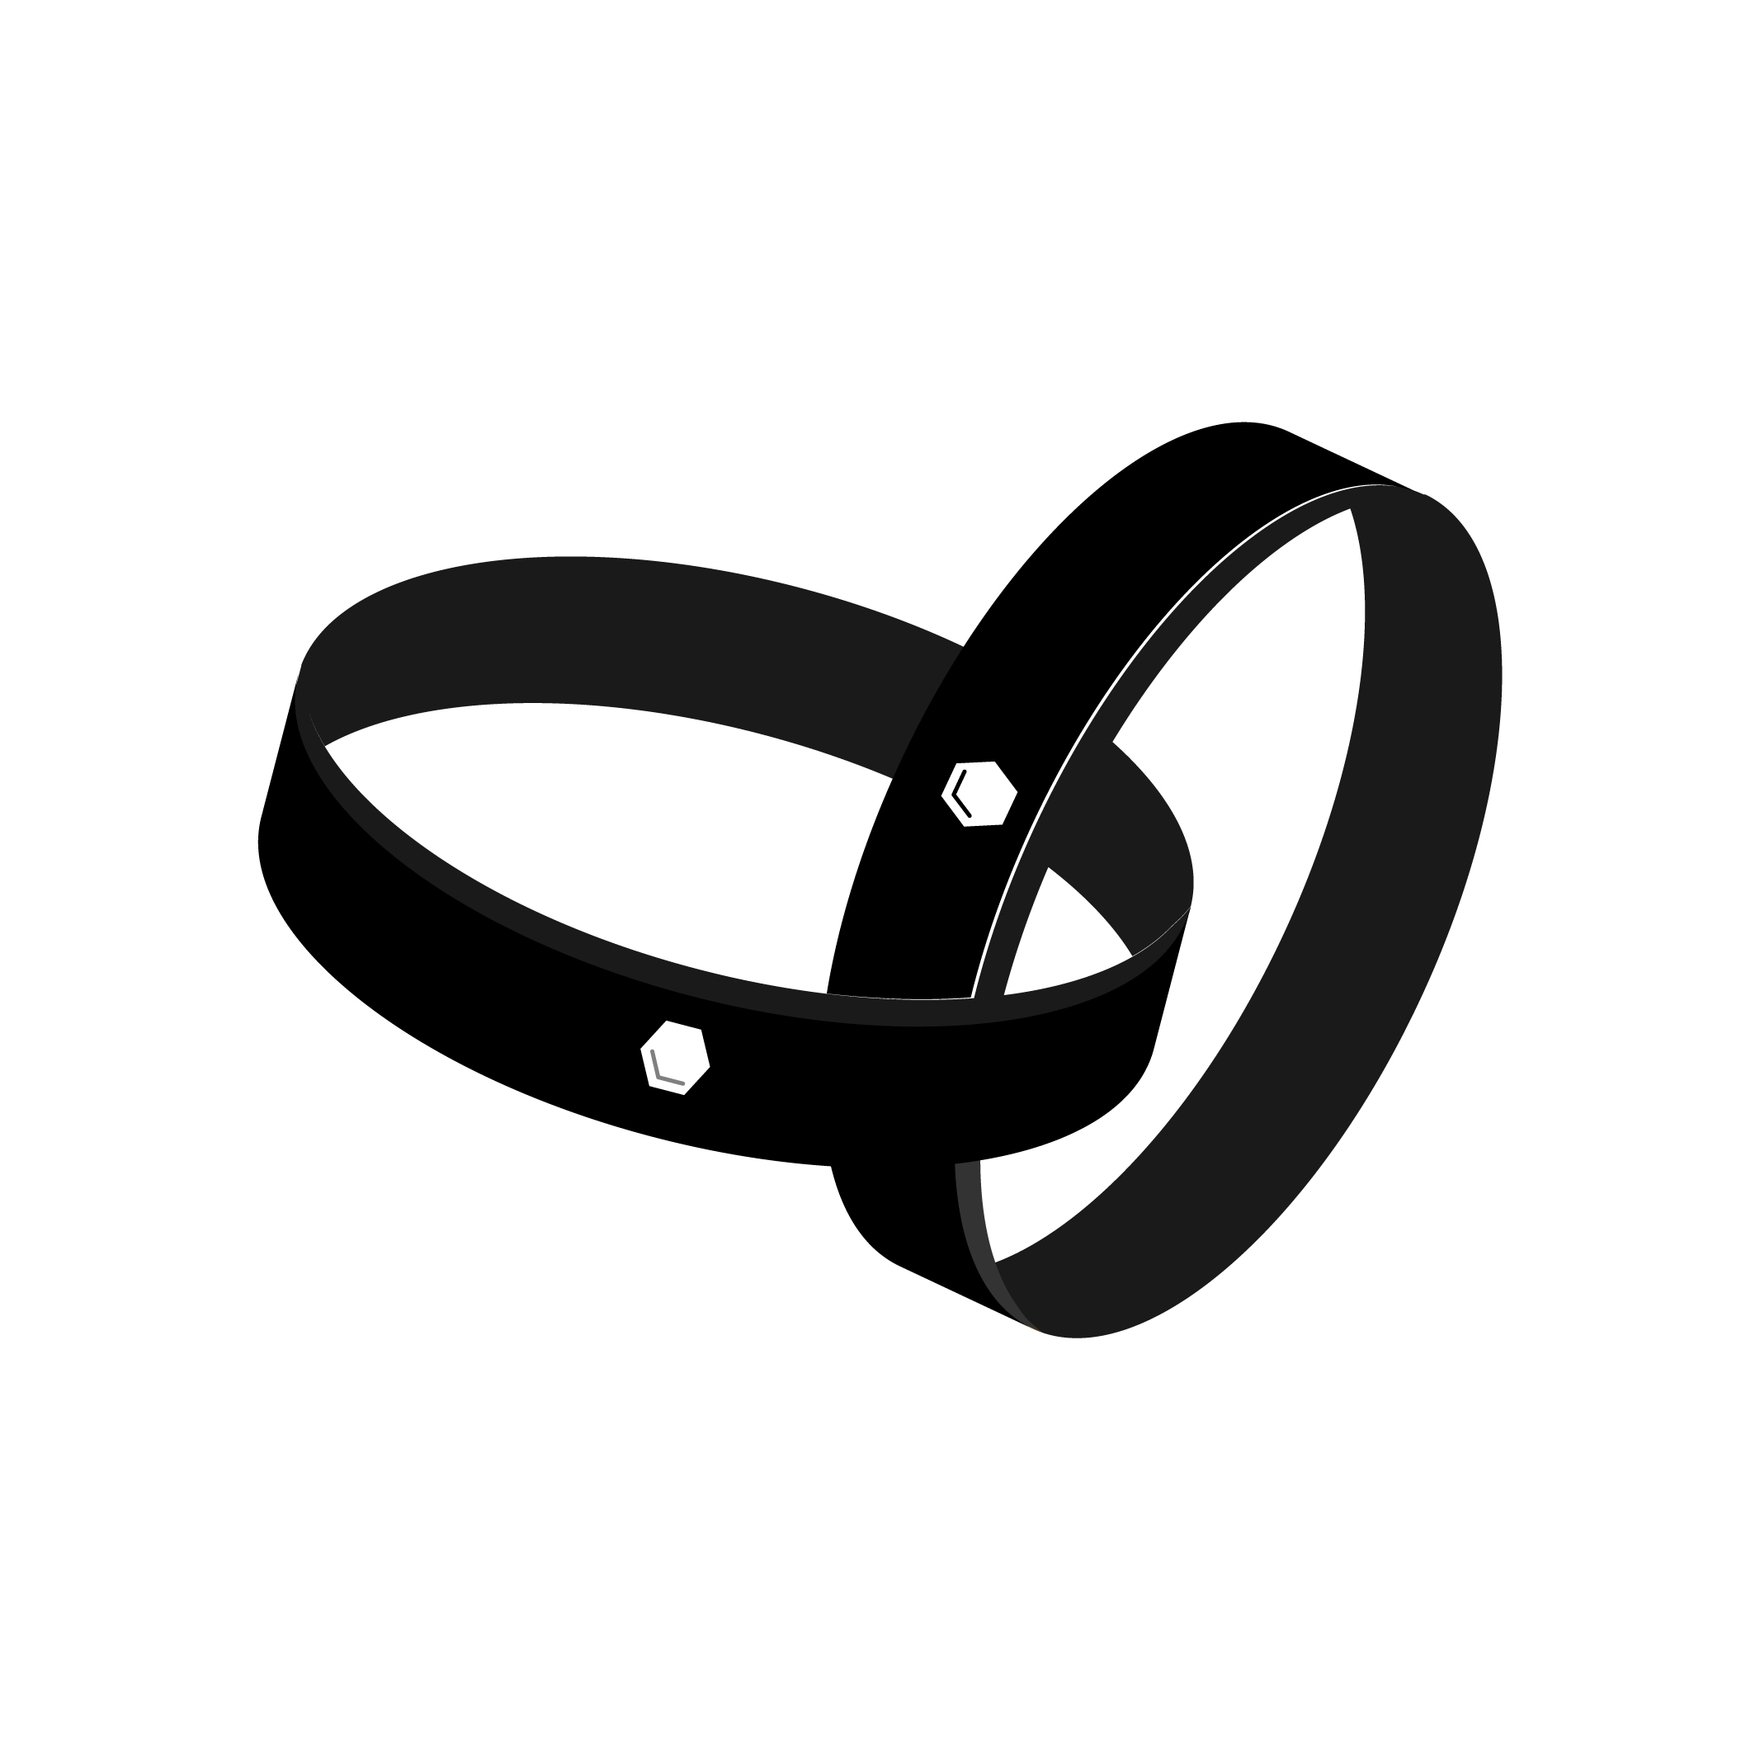 Free Wedding Ring Silhouette in Illustrator, EPS, SVG, JPG, PNG